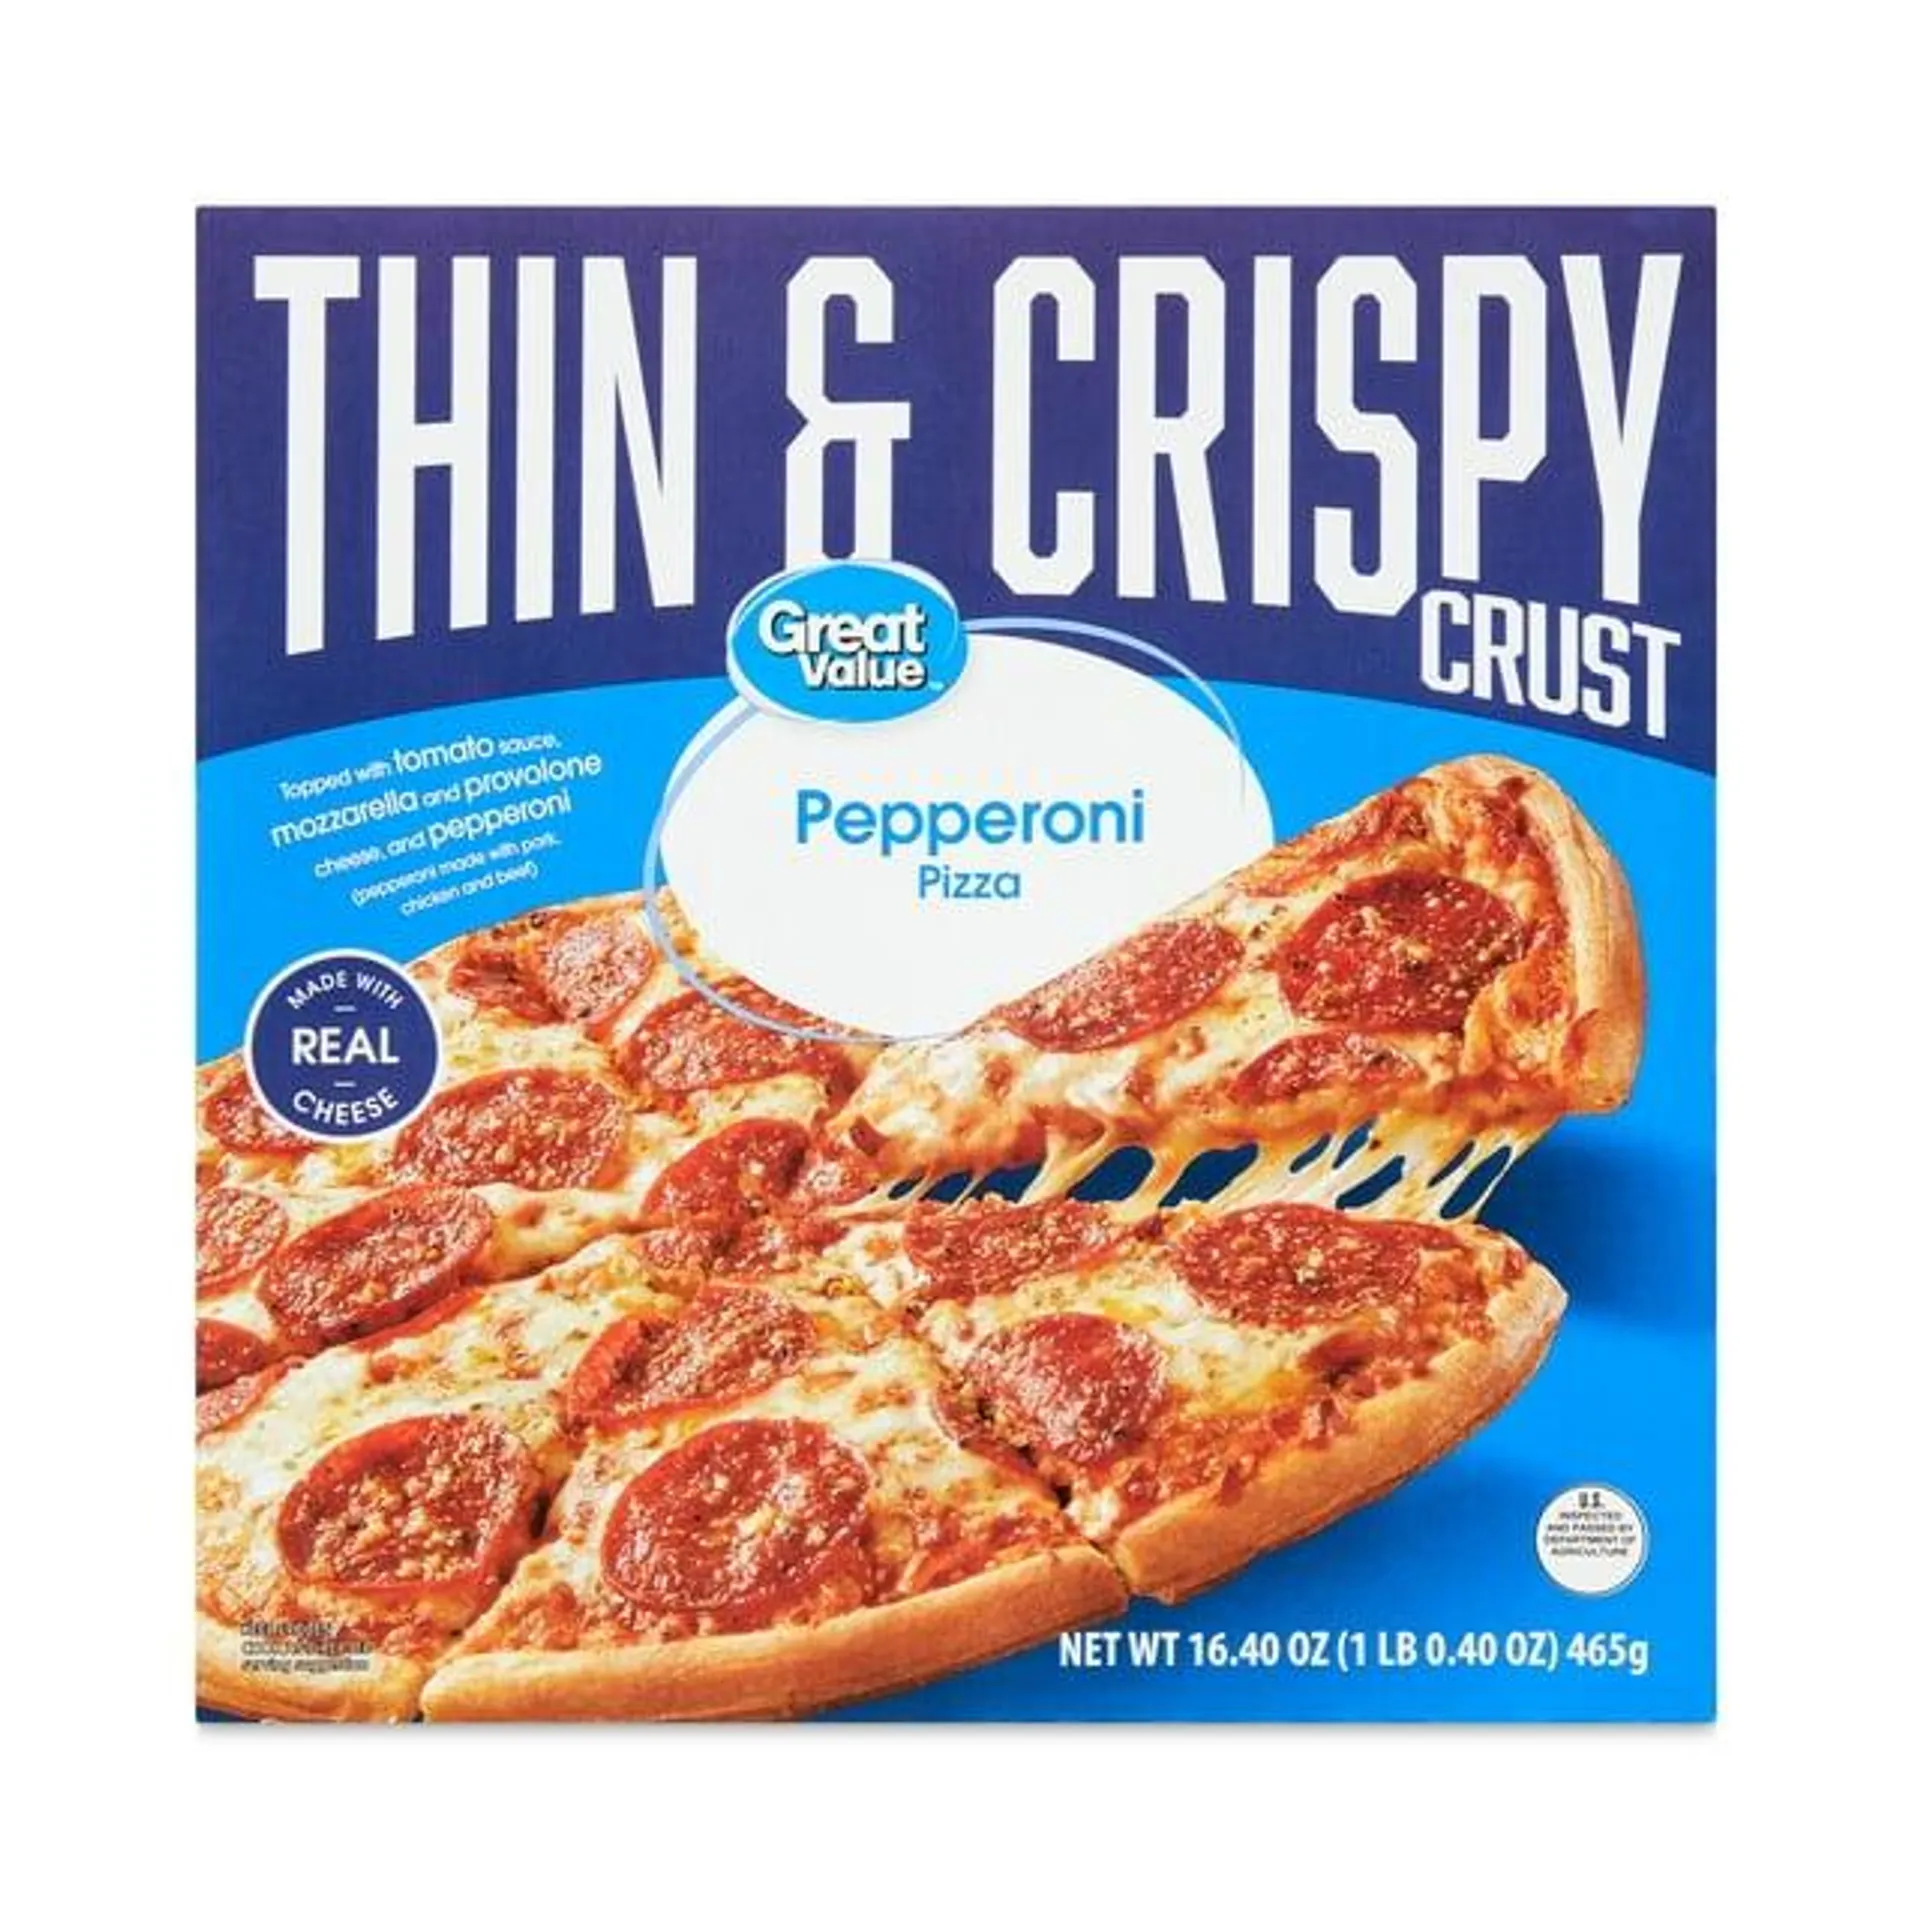 Great Value Thin Crust Pepperoni Frozen Pizza, 16.4 oz (Frozen)